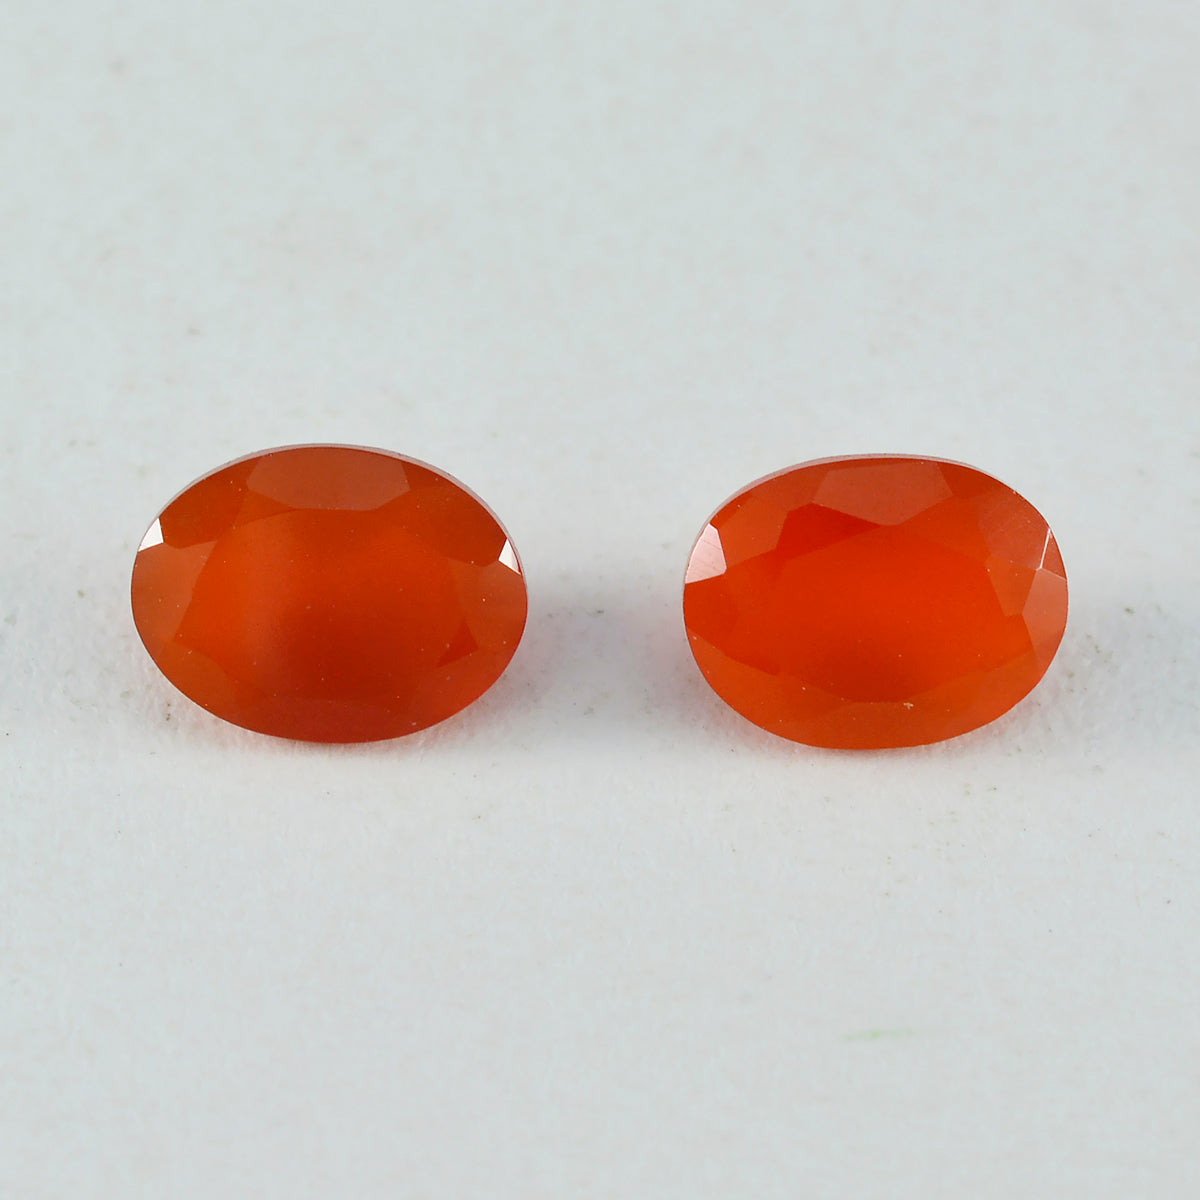 Riyogems 1PC Real Red Onyx Facet 10x14 mm ovale vorm fantastische kwaliteit edelsteen